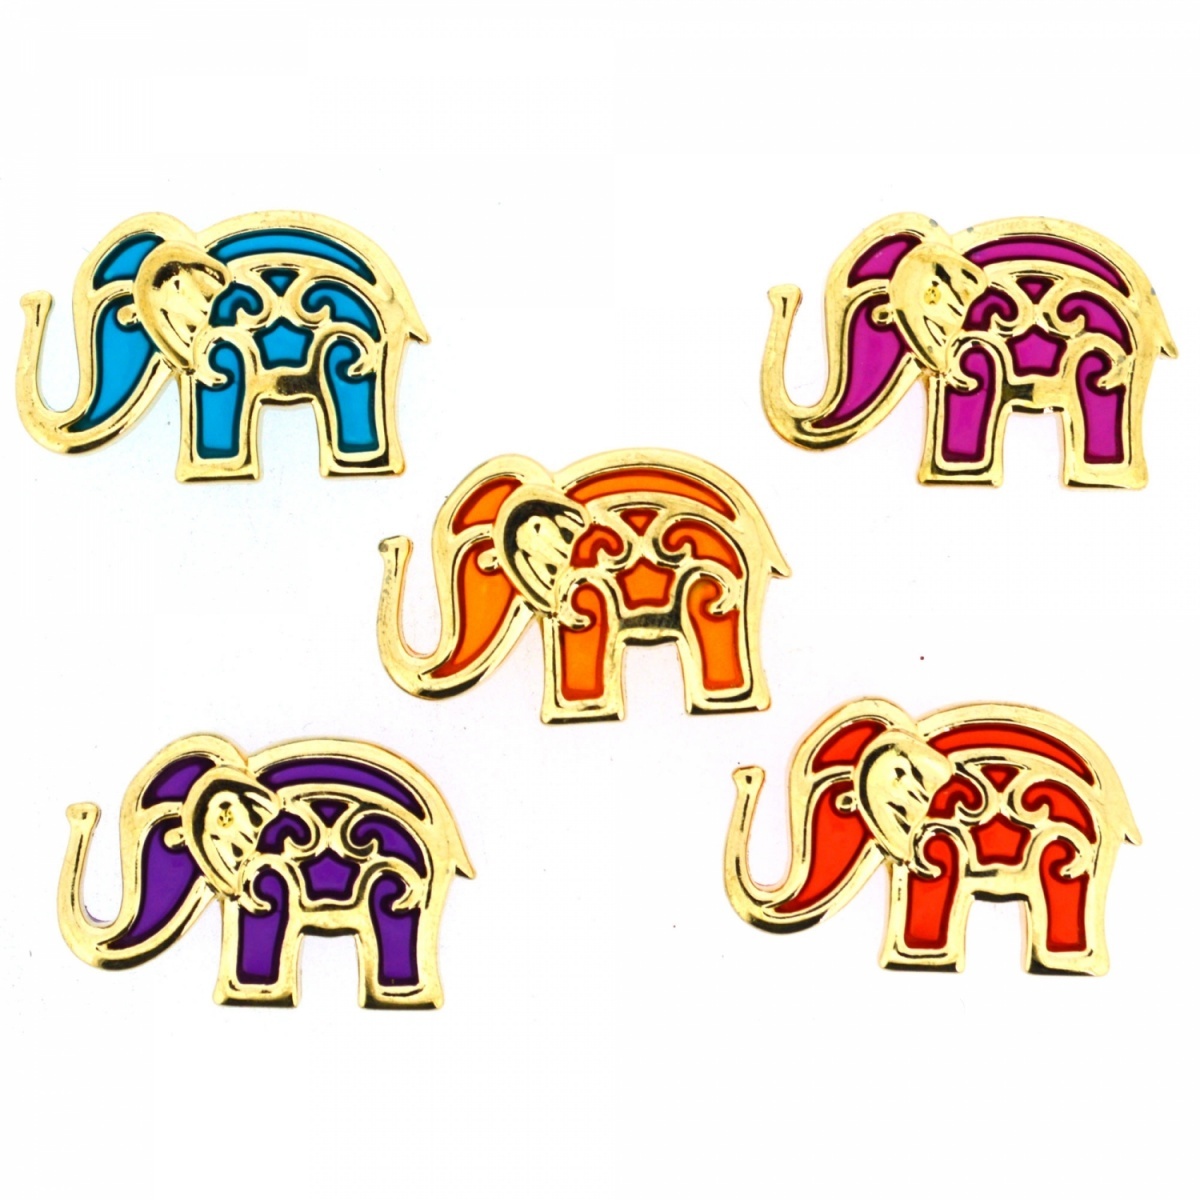 Bollywood Elephants Set of Decorative Buttons фото 1